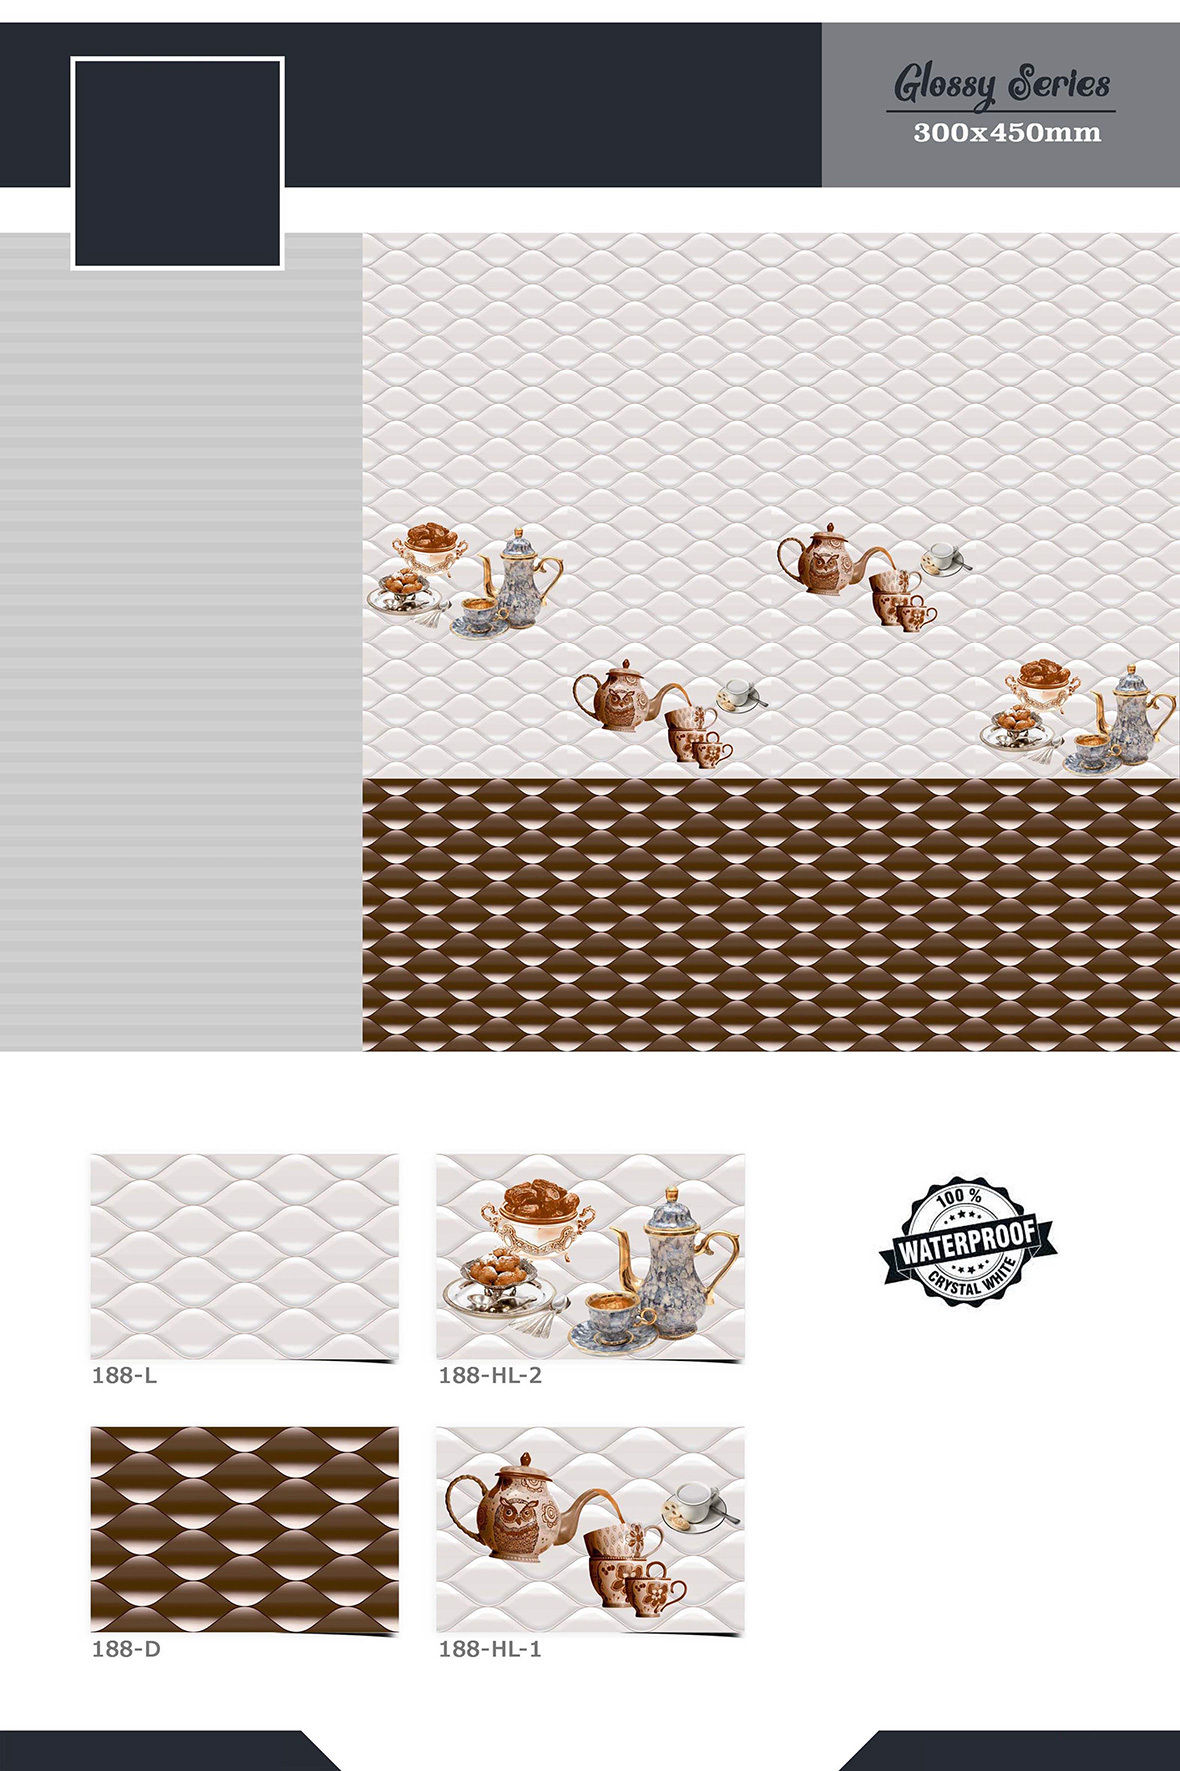 300x450m Kitchen Wall Tiles